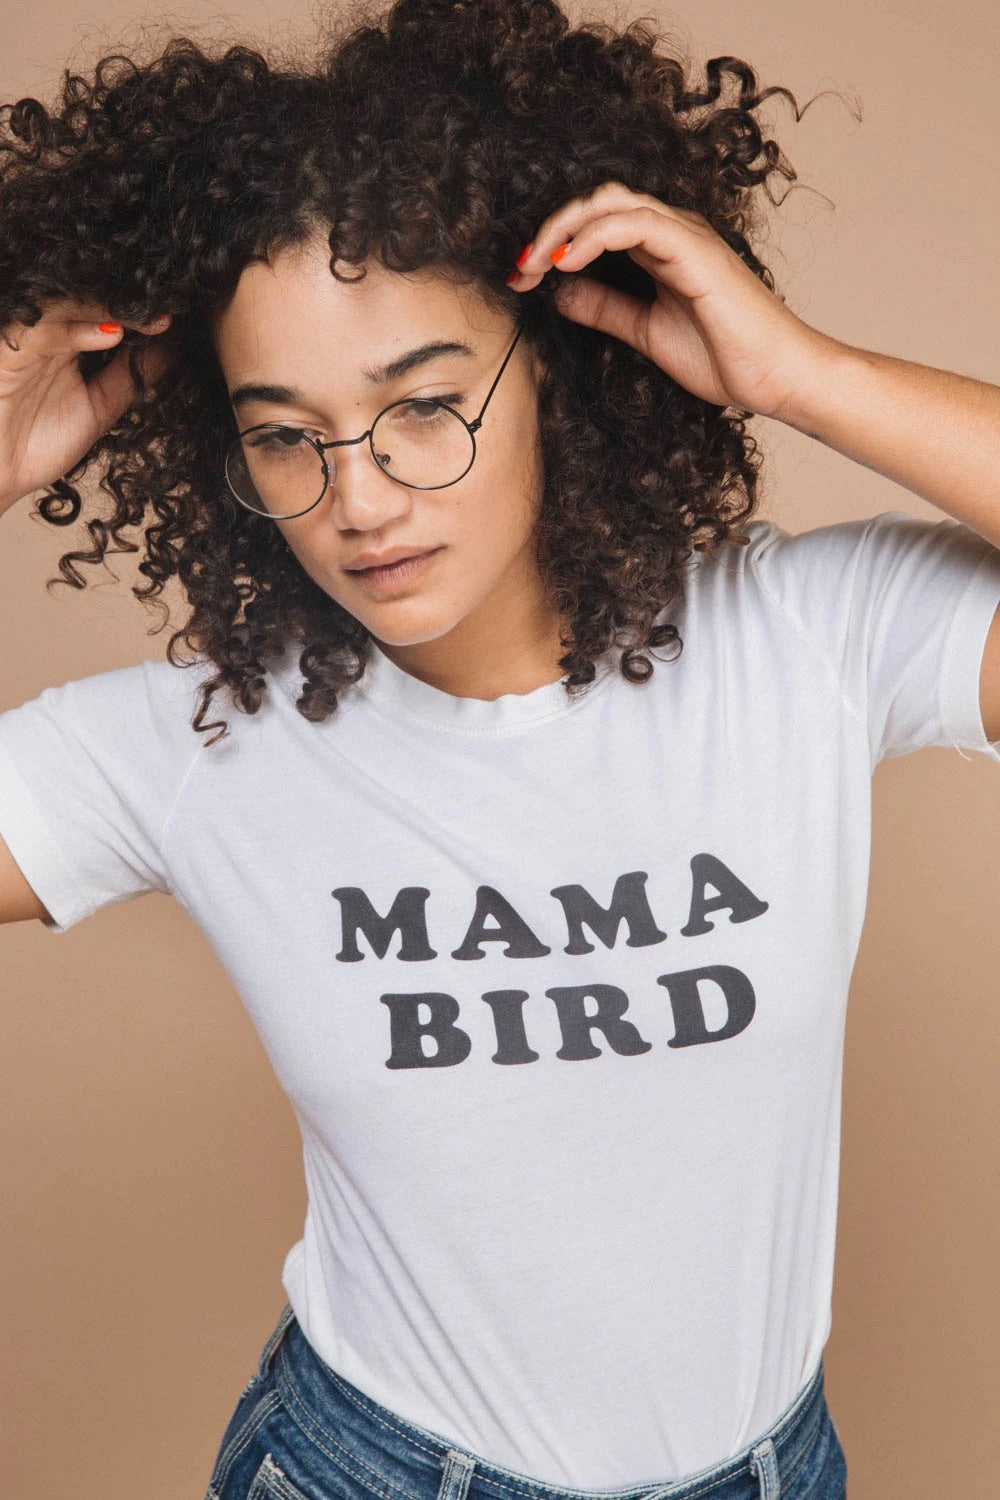 Mama Bird, The Original Tee